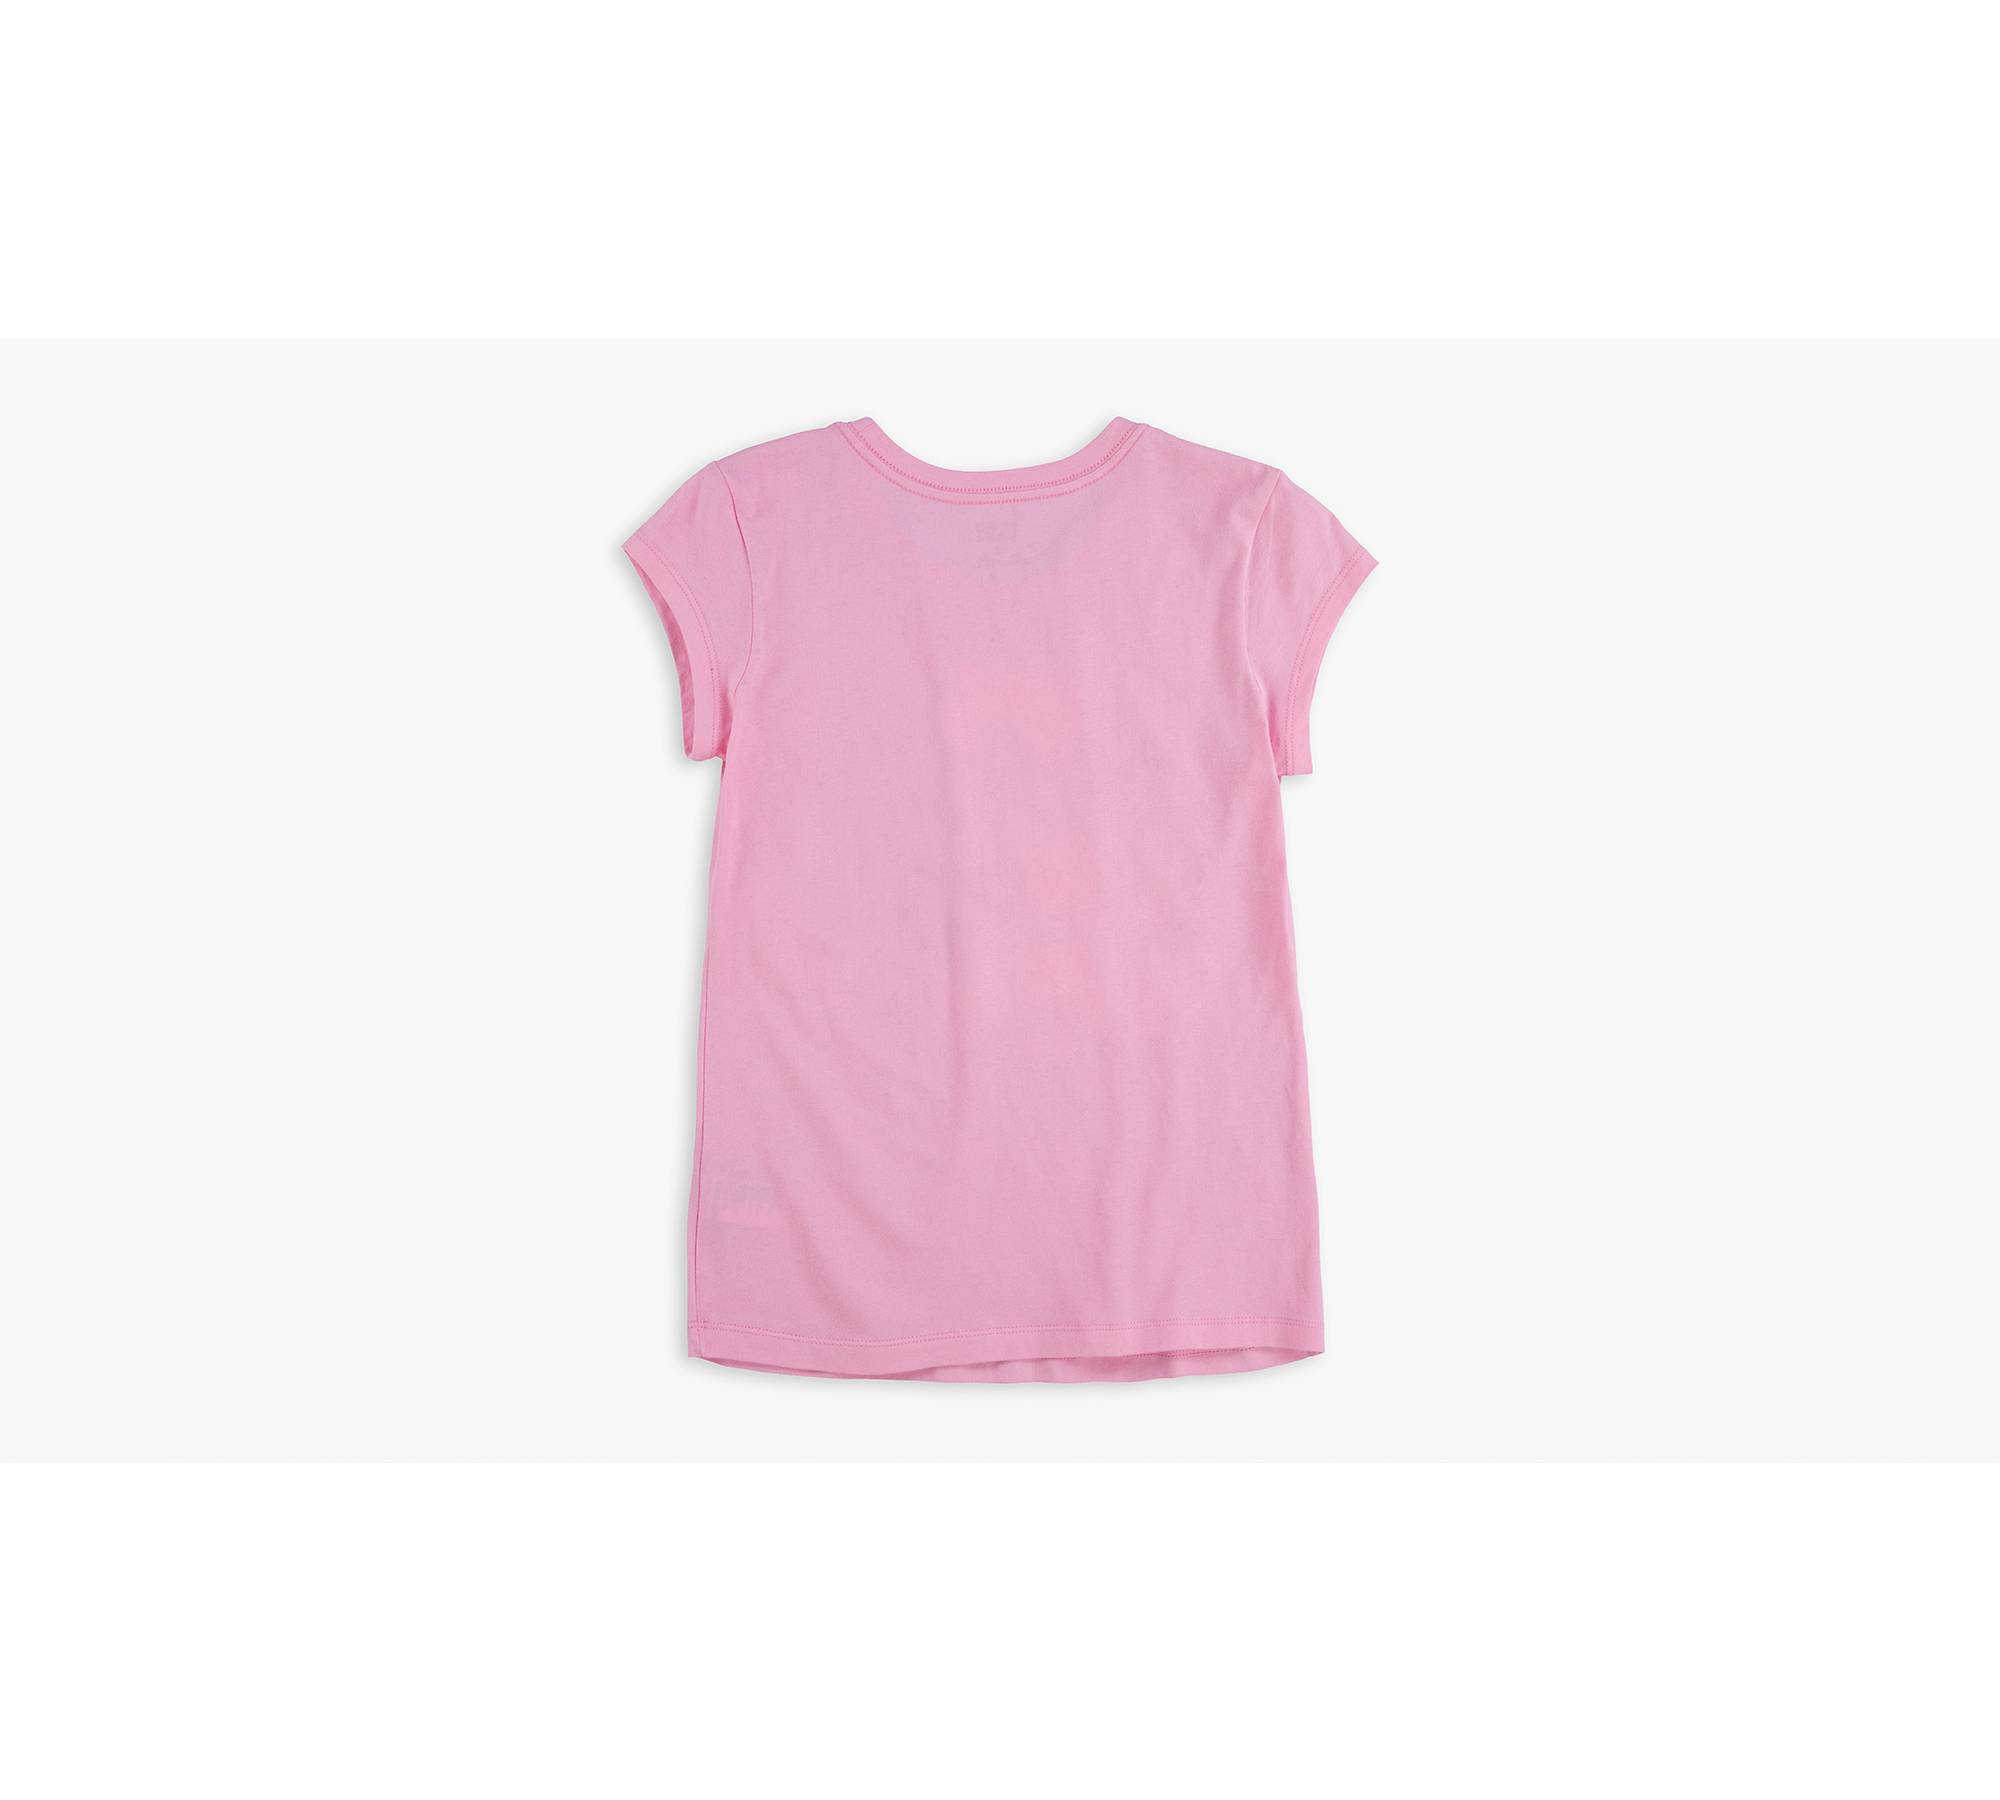 Toddler Girls 2t-4t Levi's® X Super Mario Tee Shirt - Pink